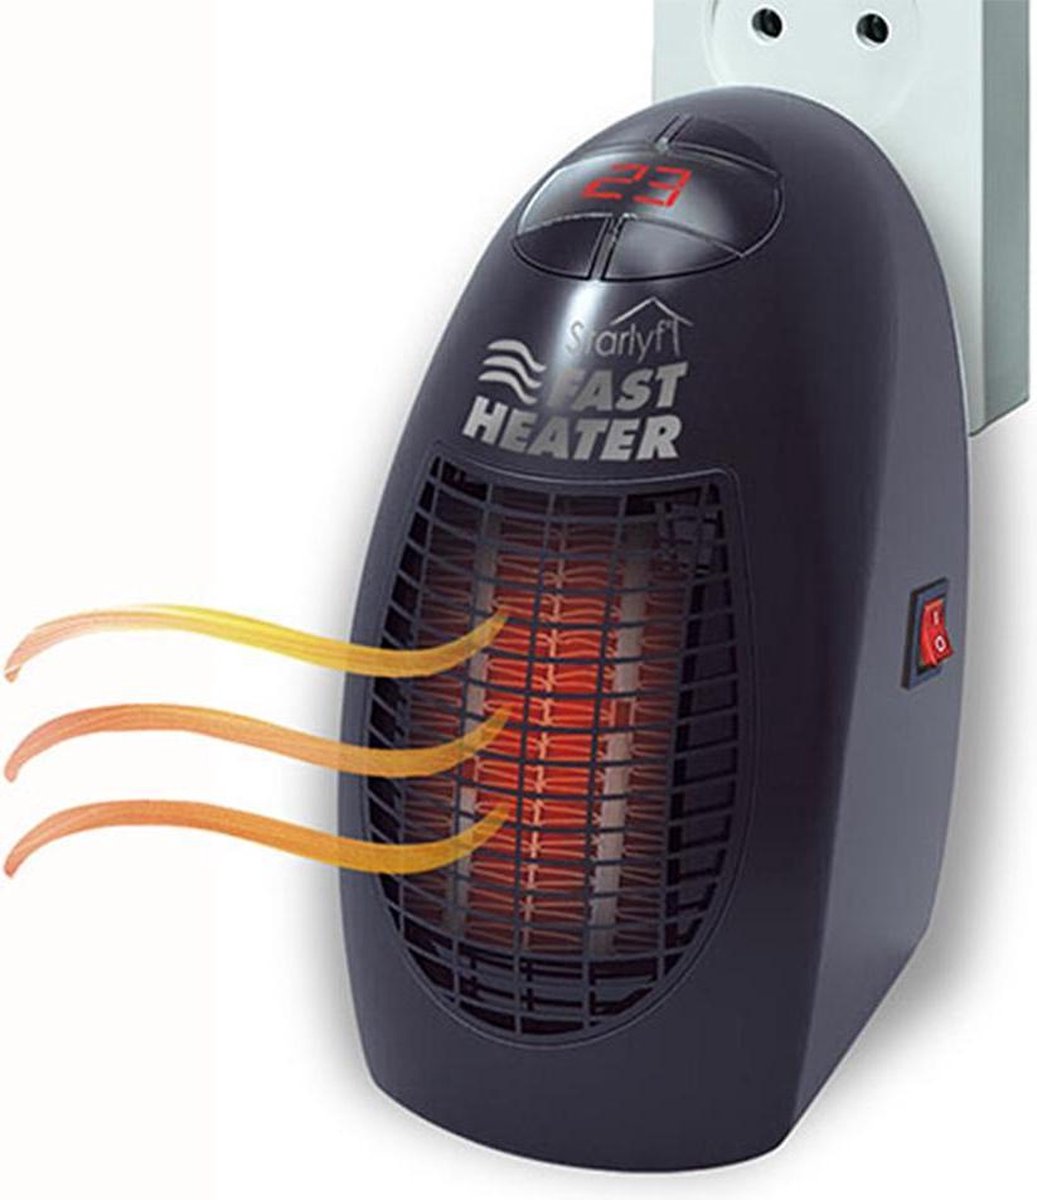 Starlyf Fast Heater Ventilatorkachel Zwart | bol.com